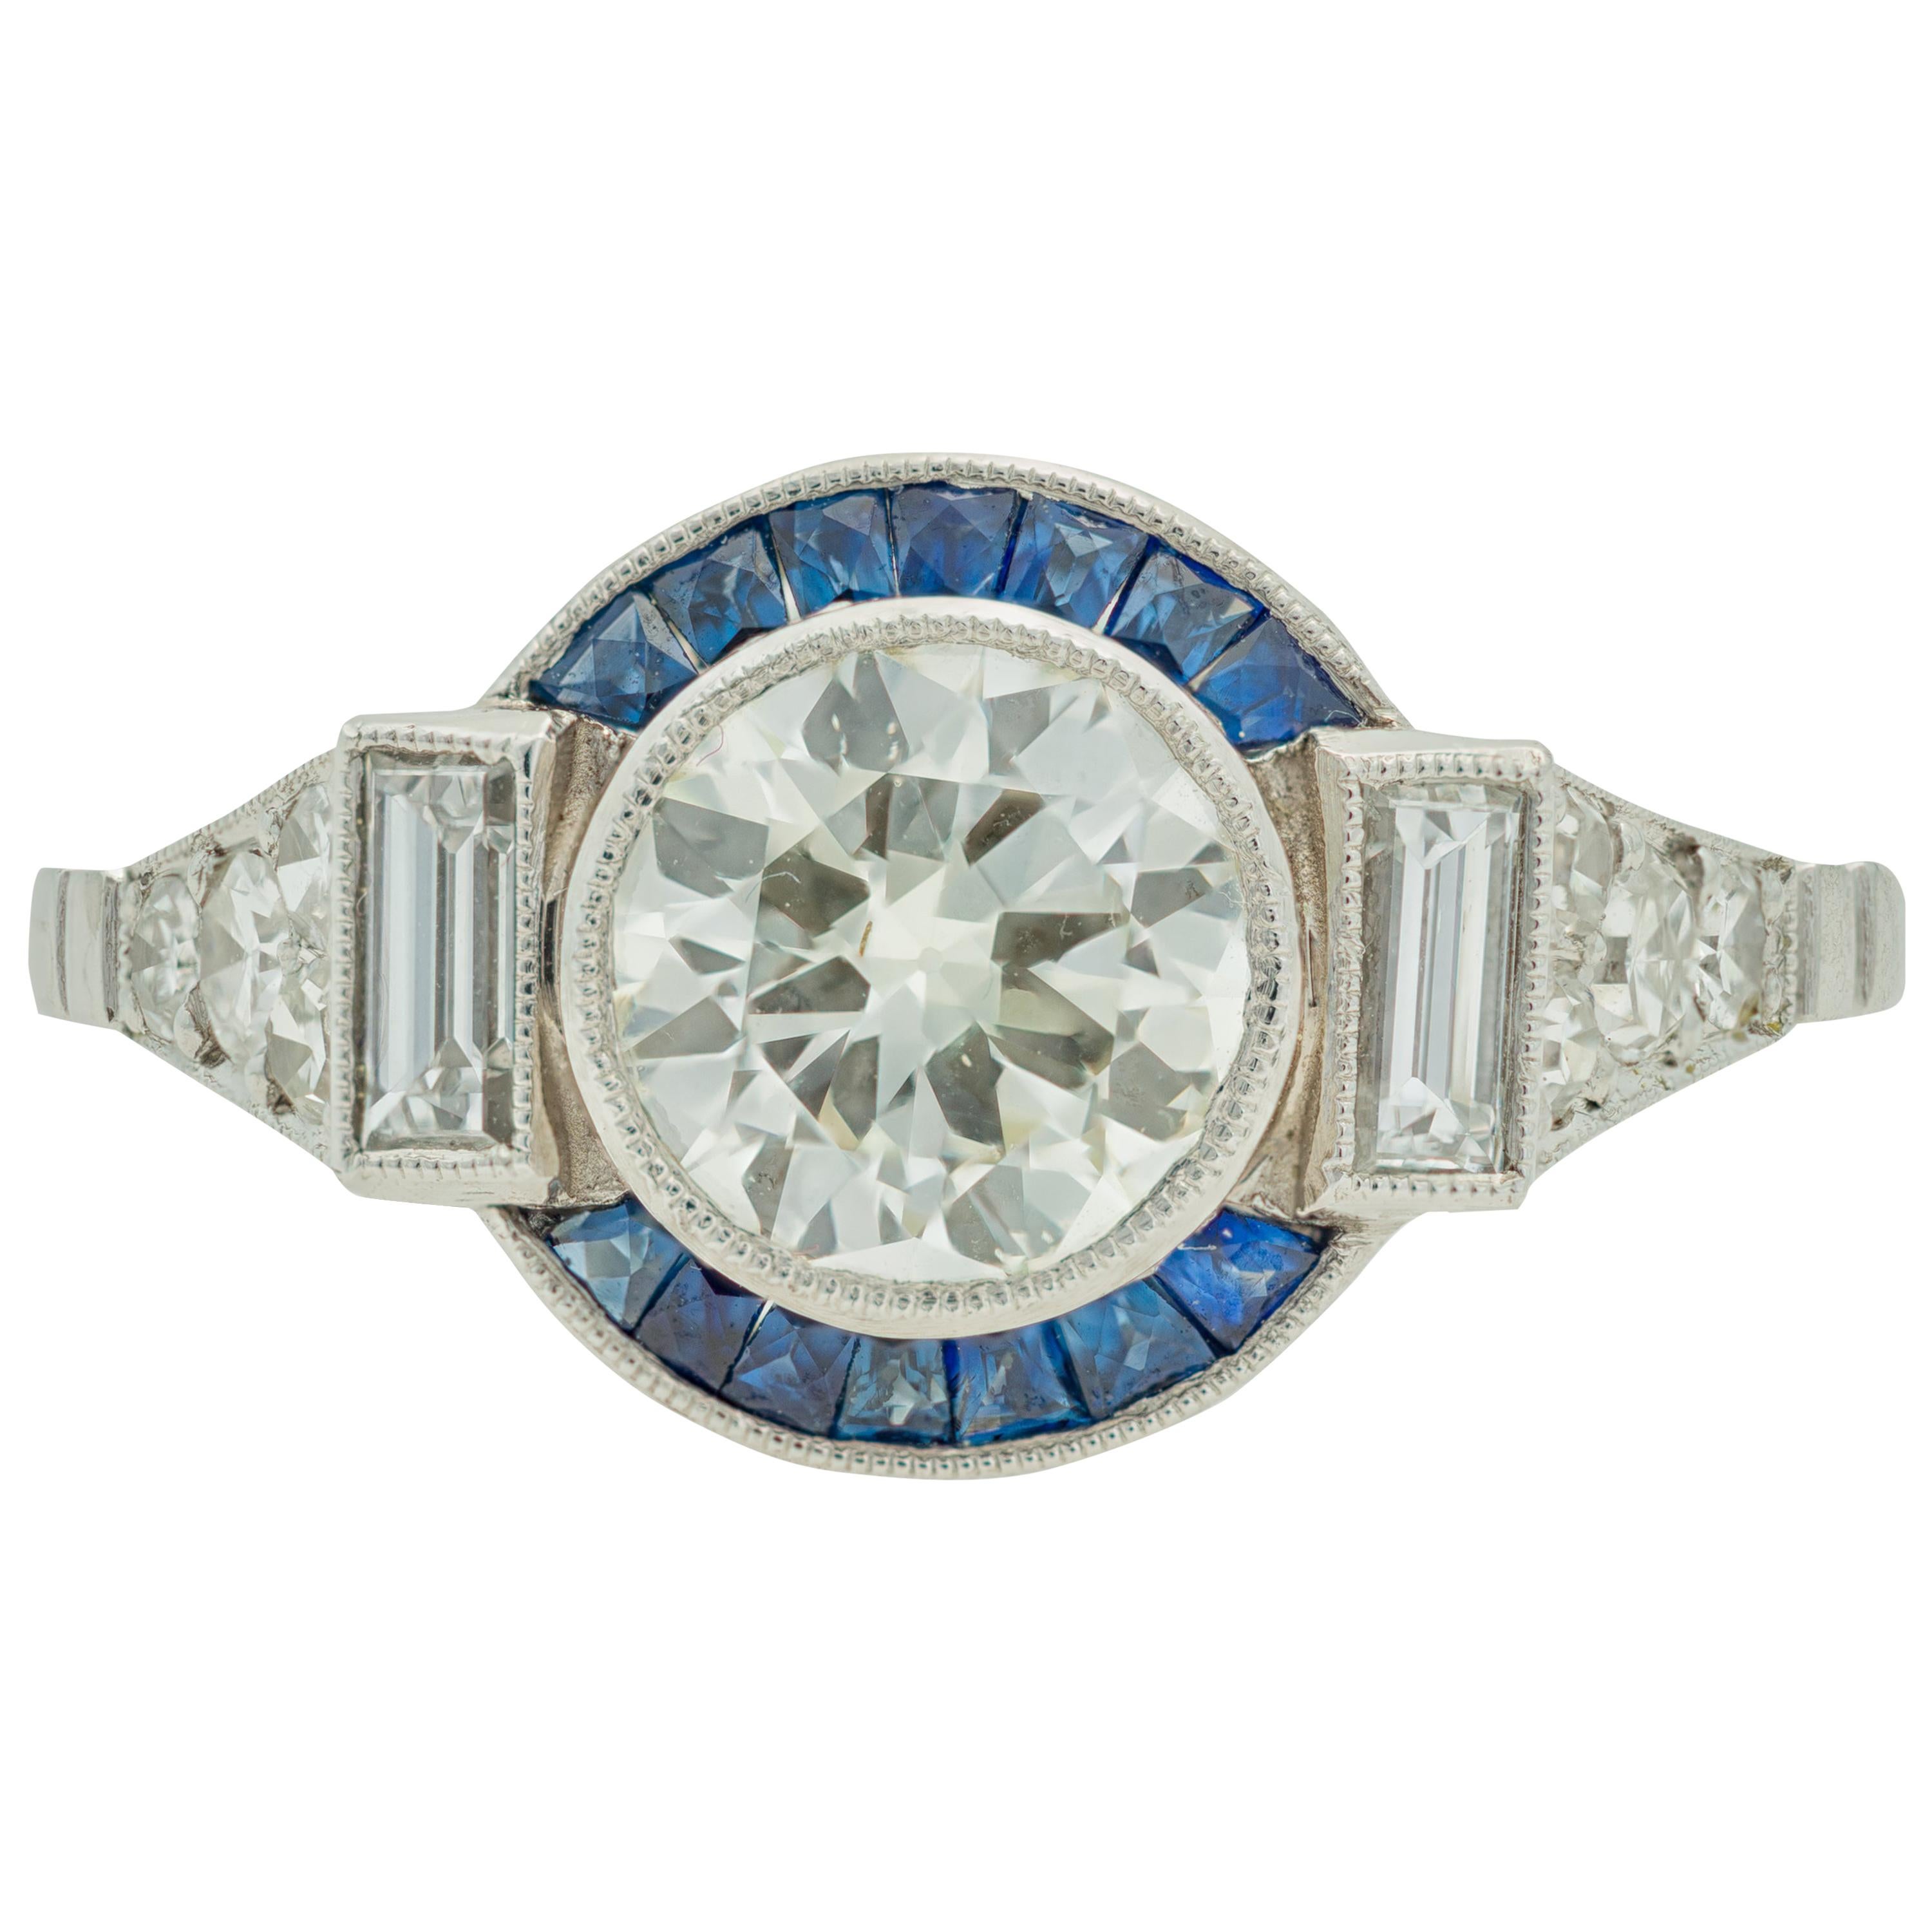 Art Deco Style 1960s 1.11 Carat Diamond Ring with Sapphire Halo in Platinum